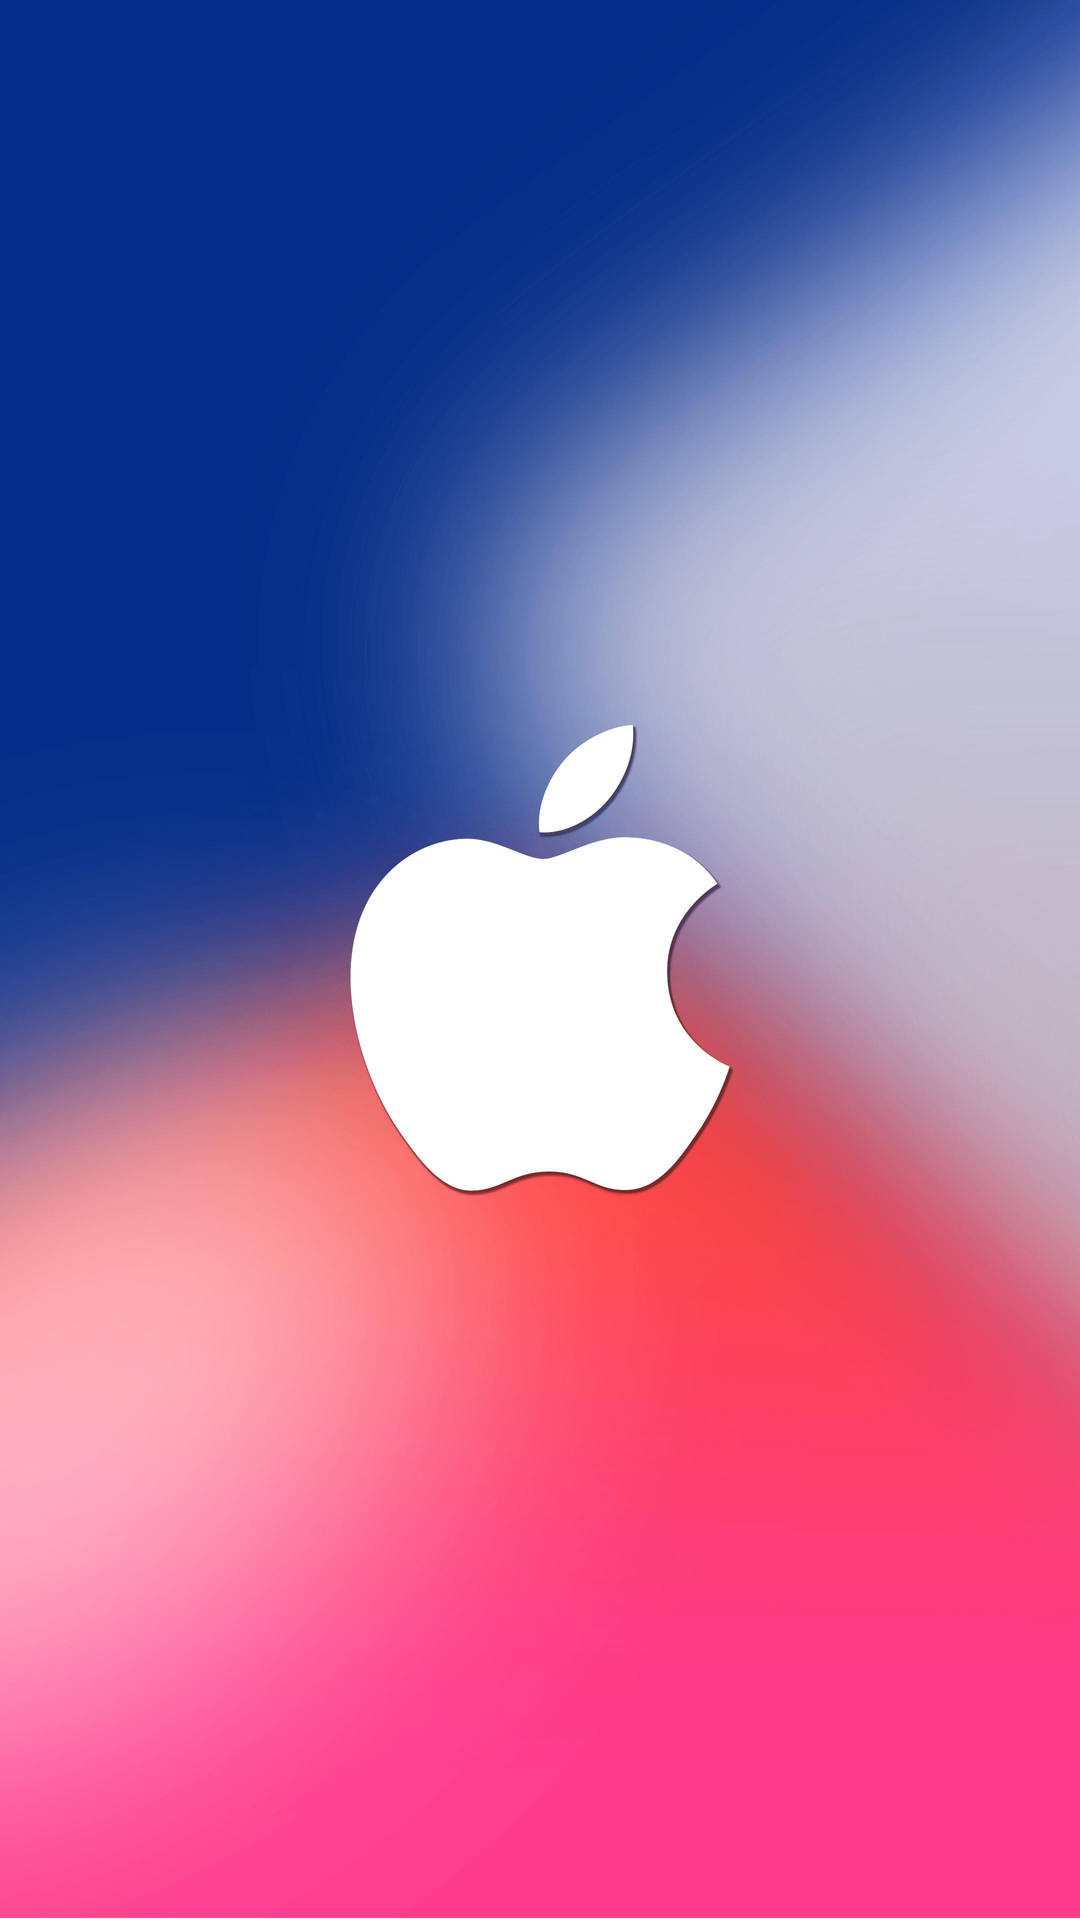 Iphonex Logo Original De Apple En Colores Desenfocados. Fondo de pantalla